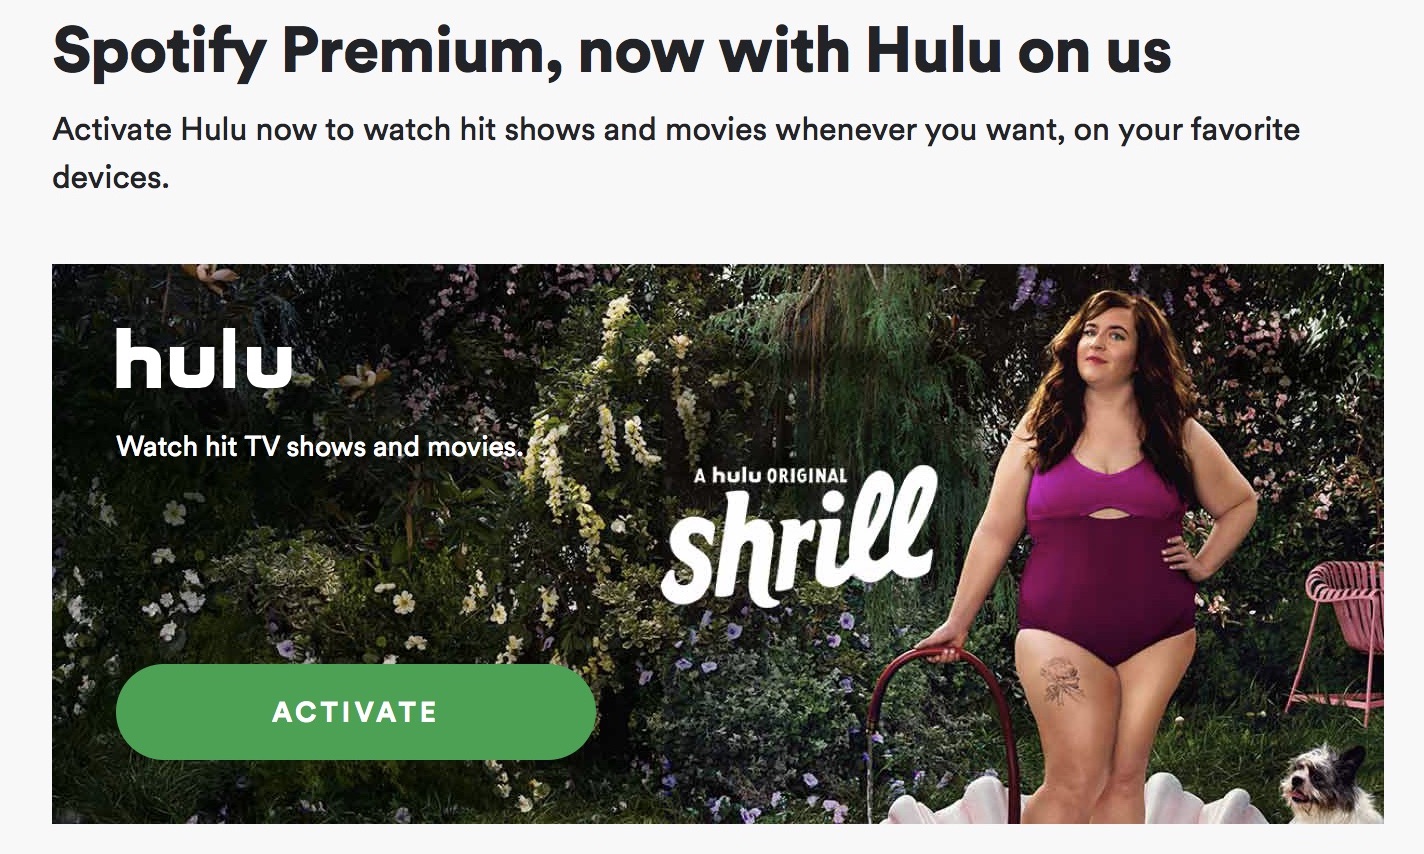 spotify premium with hulu